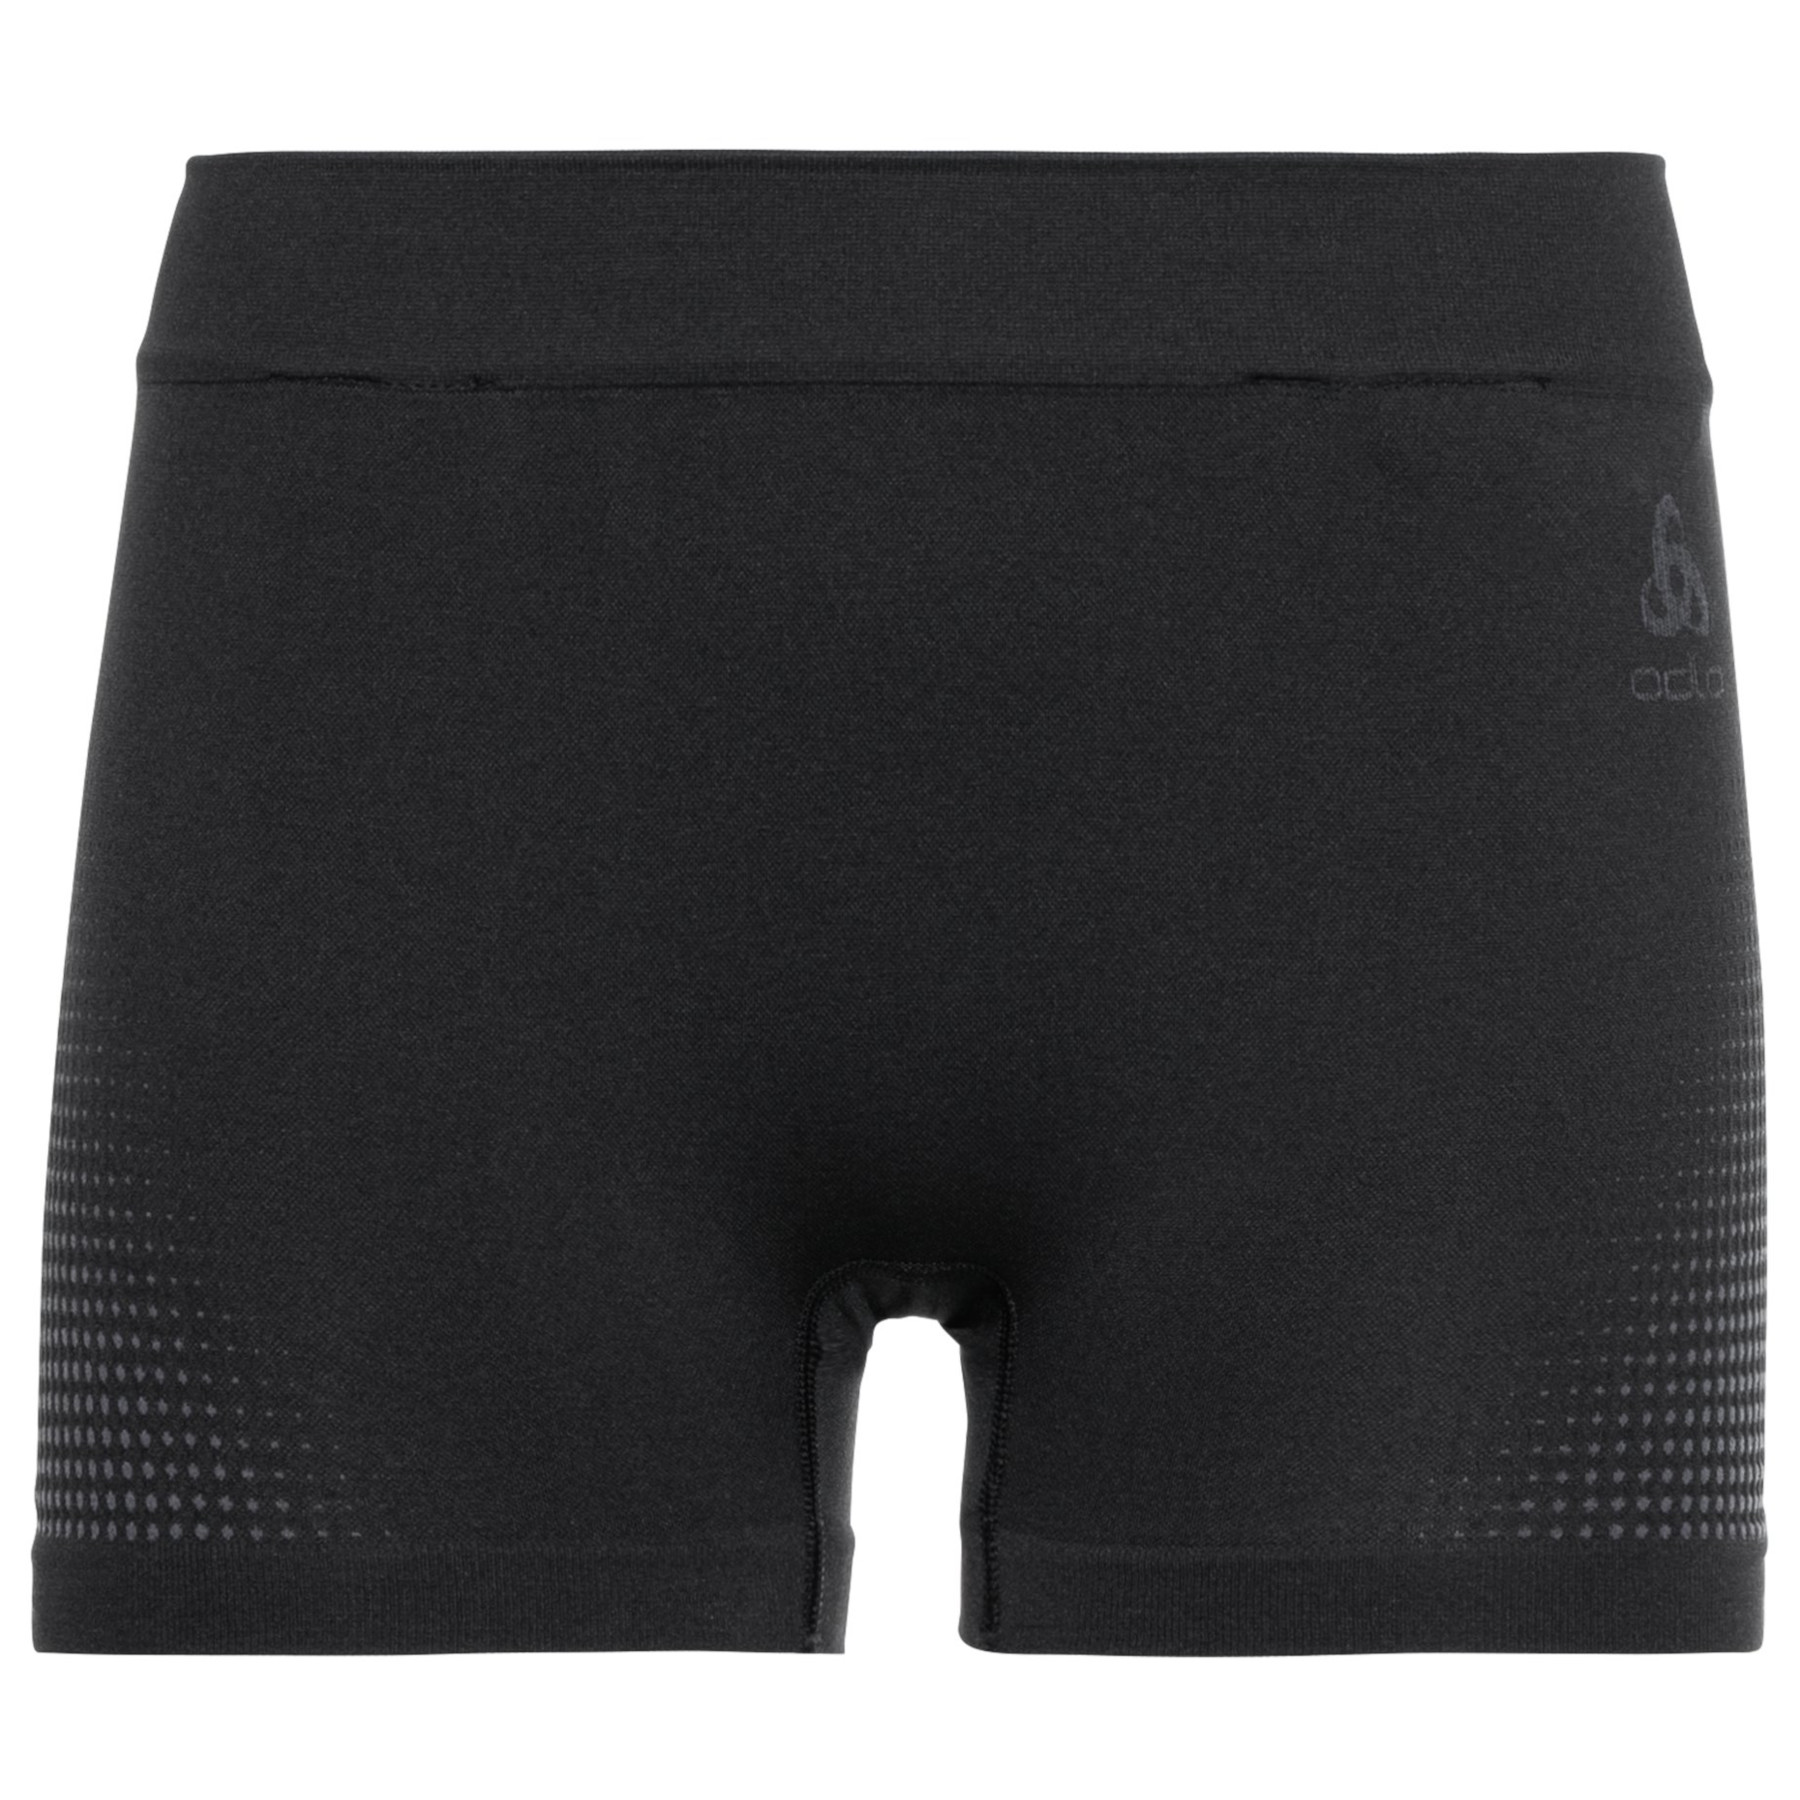 Image of Odlo Women's Performance Warm Eco Baselayer Panty - black - new odlo graphite grey